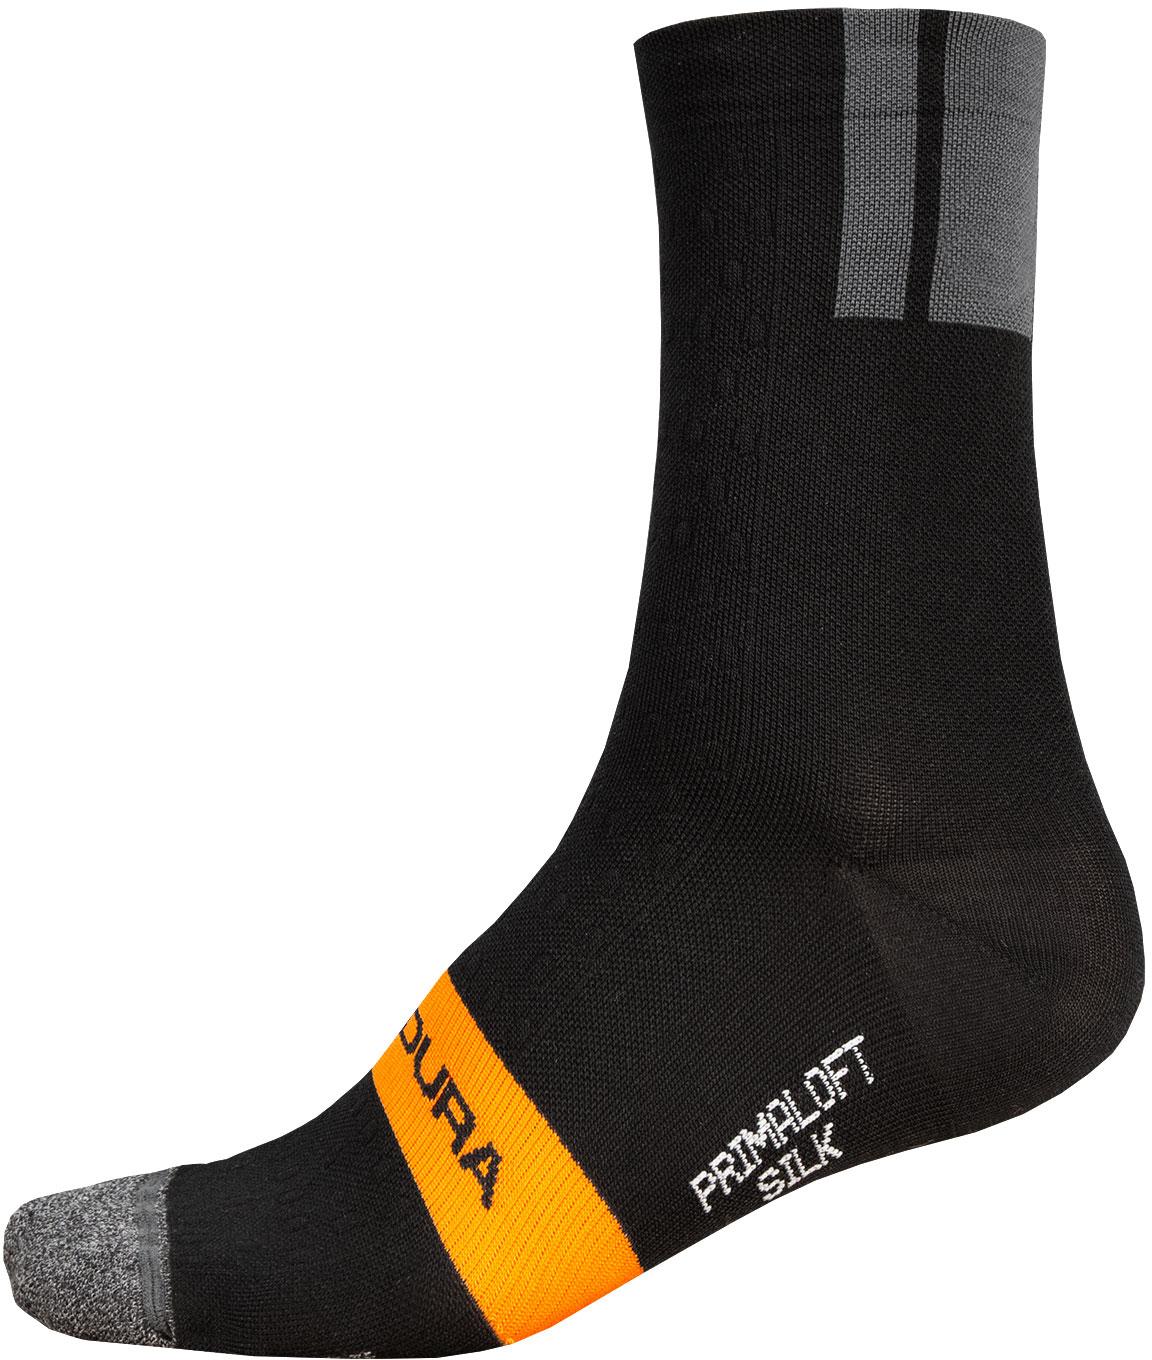 Endura Pro Sl Primaloft Socks Ii  Black